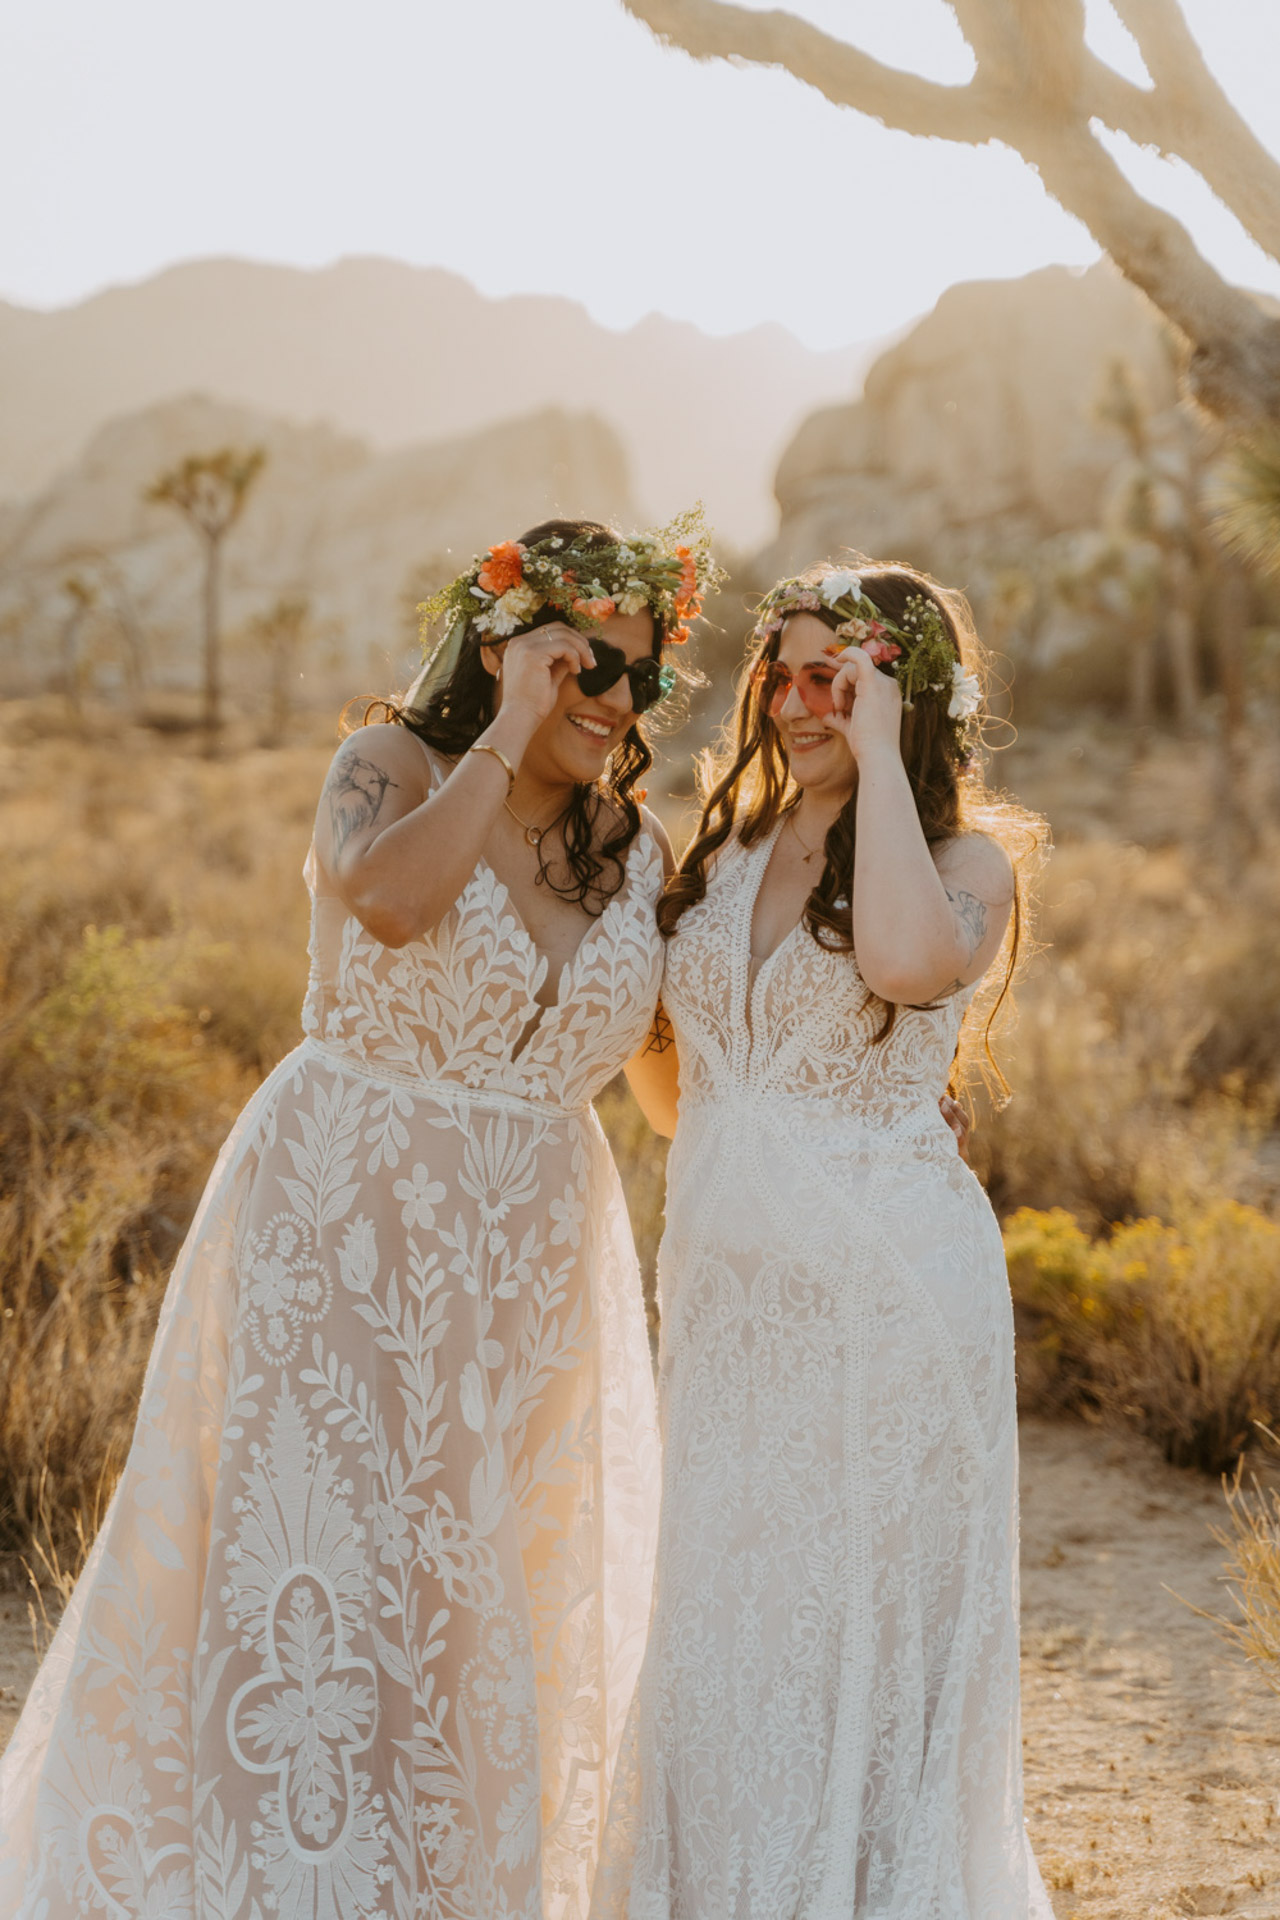 Brides smiling with fun glasses on — Joshua Tree Wedding Photographer